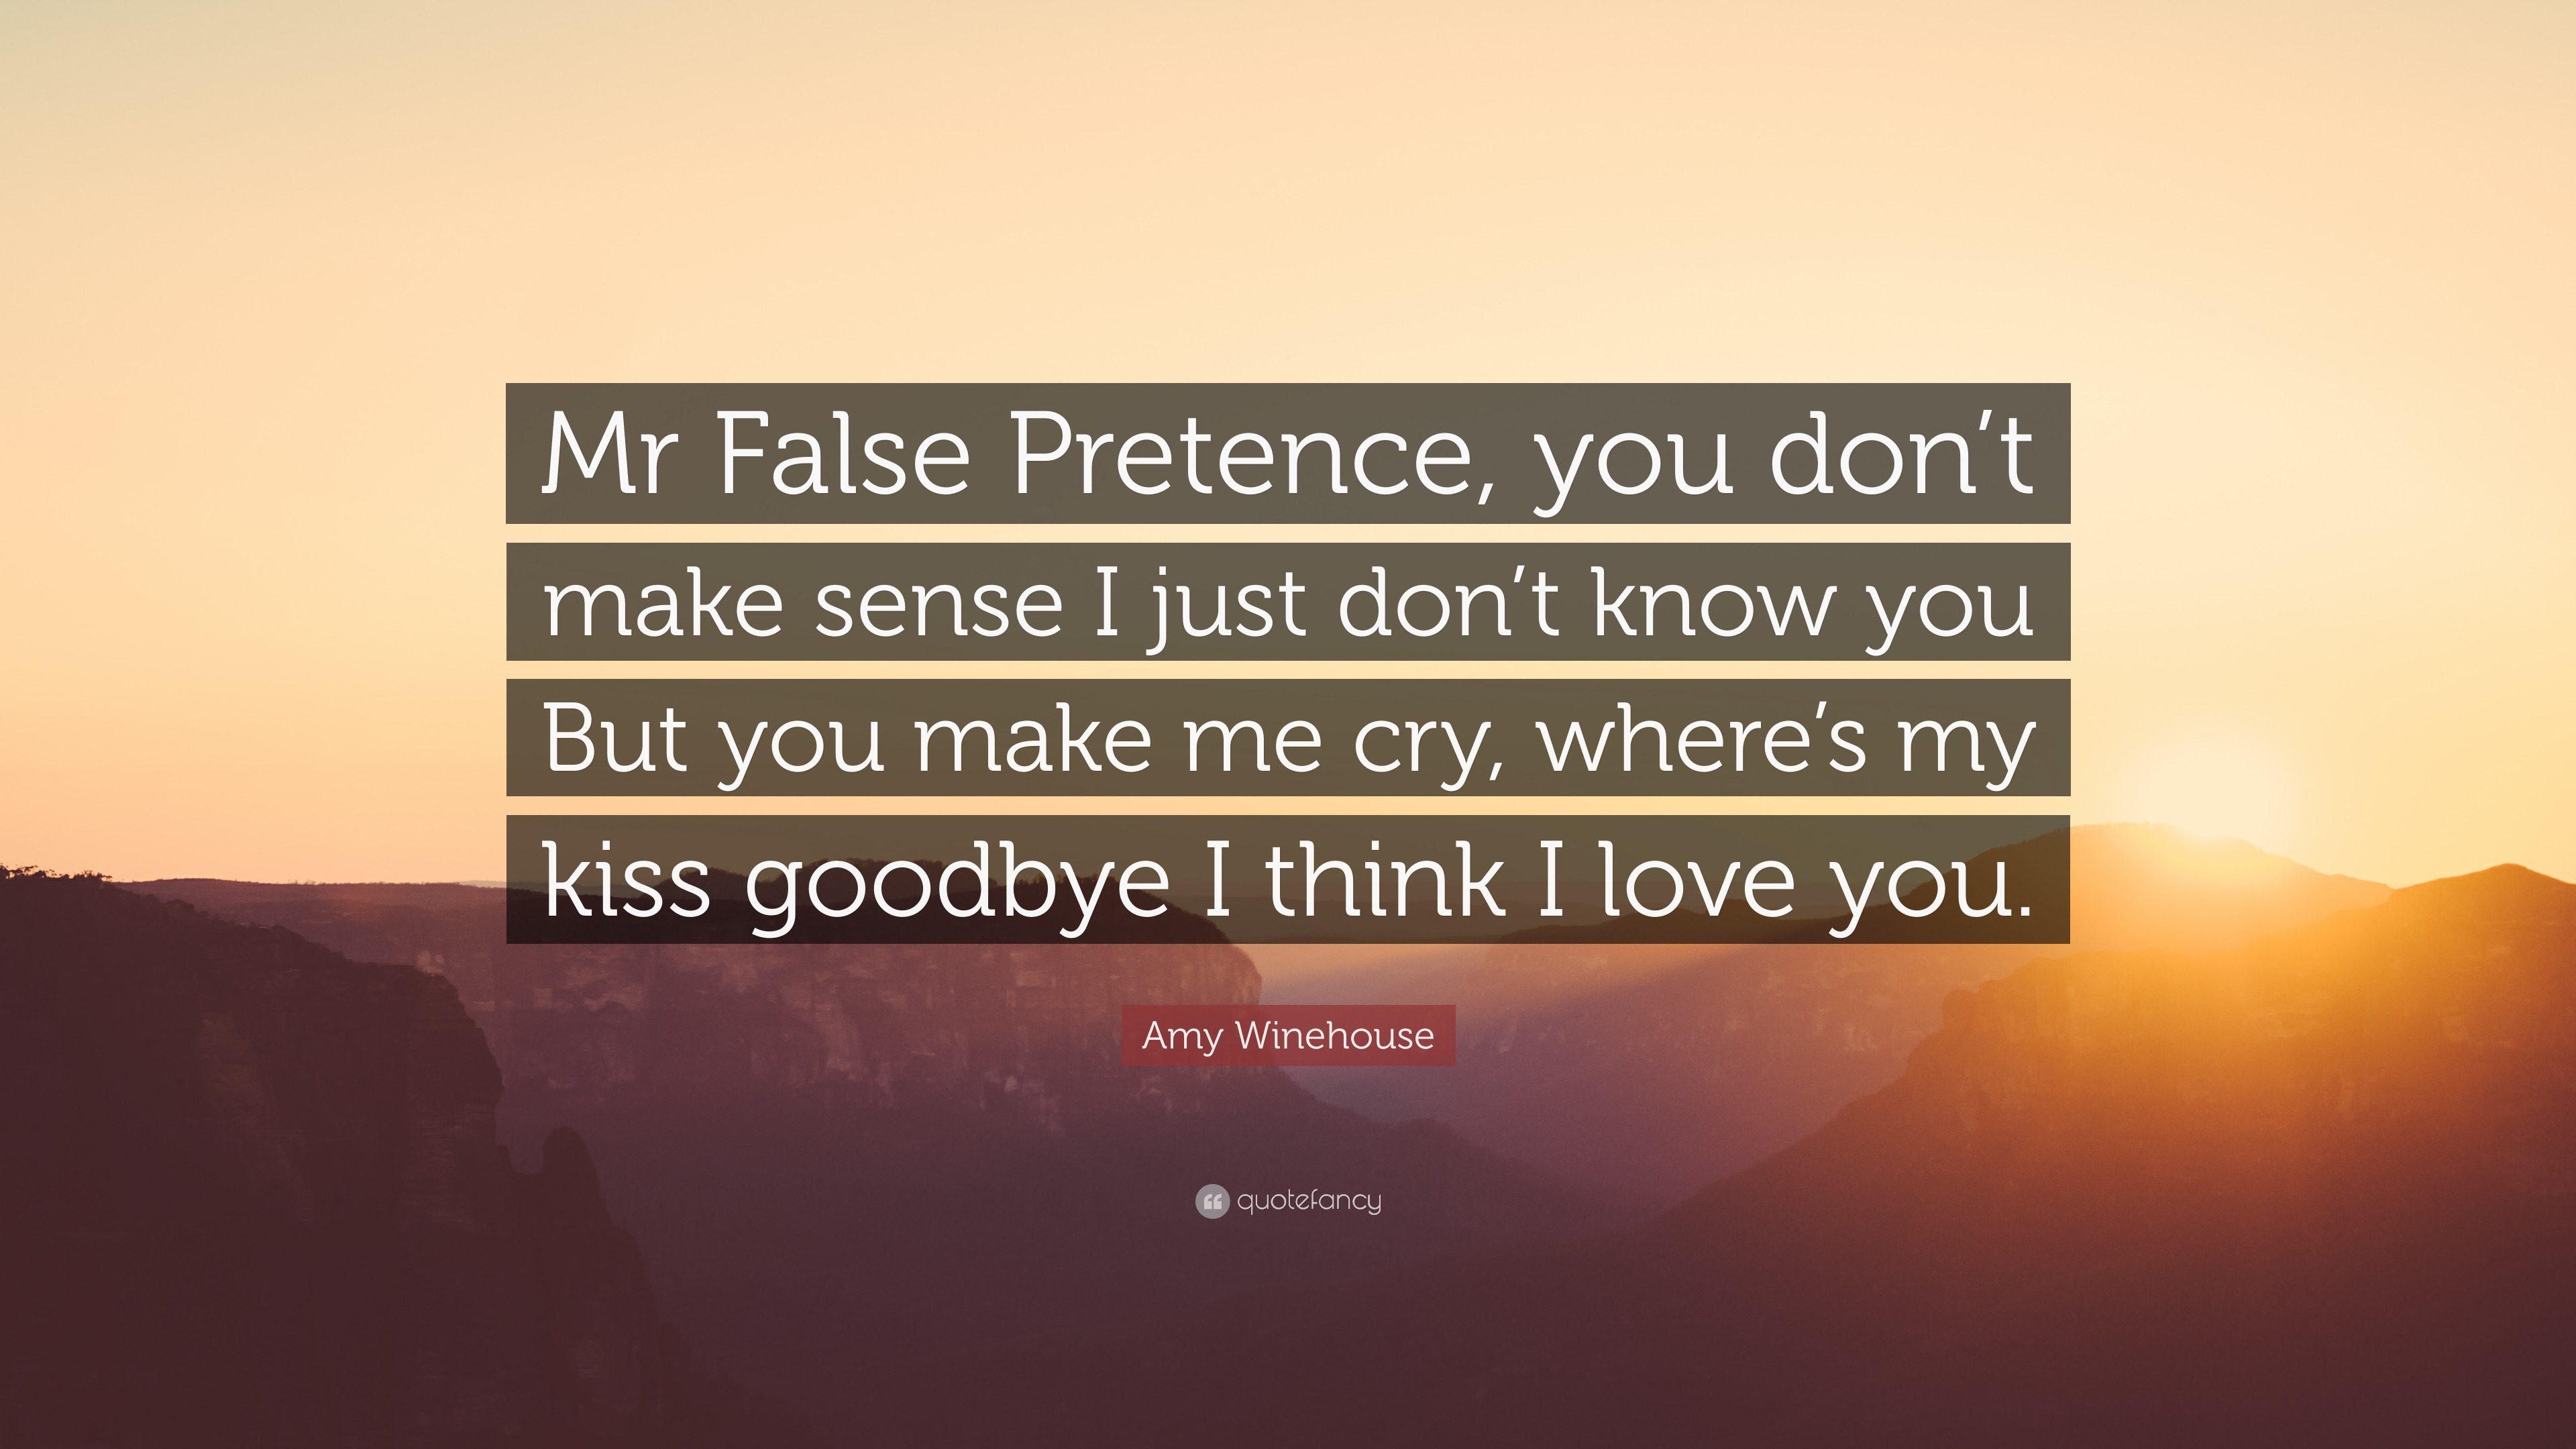 Amy Winehouse Quote “Mr False Pretence you don t make sense I